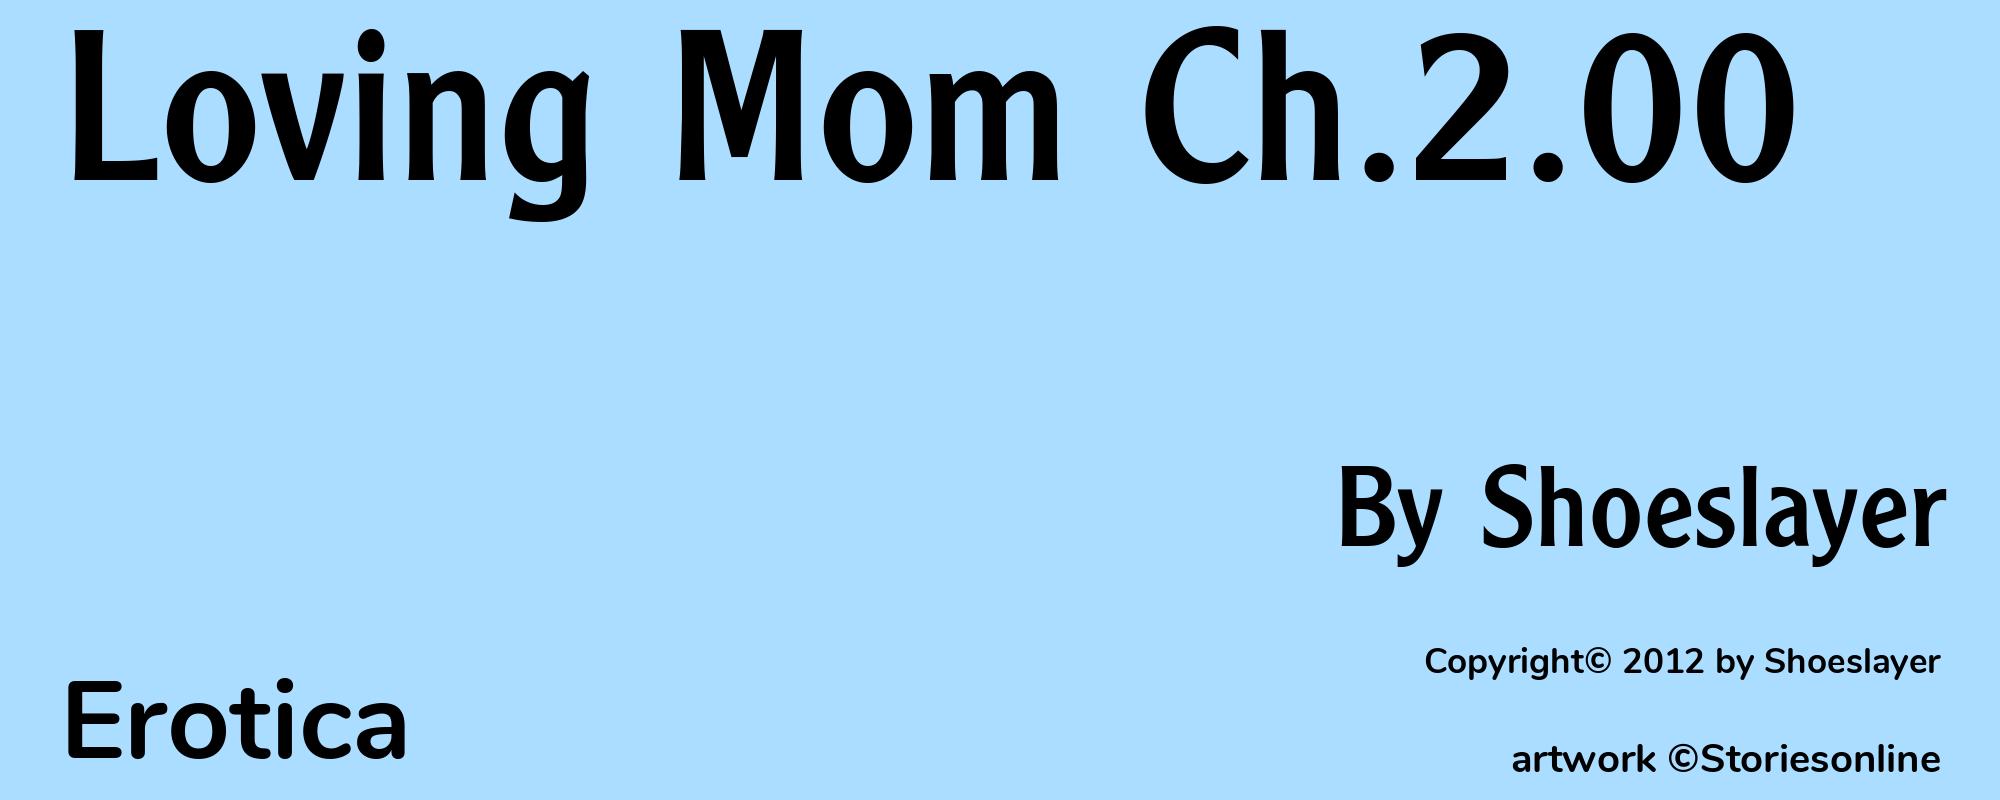 Loving Mom Ch.2.00 - Cover